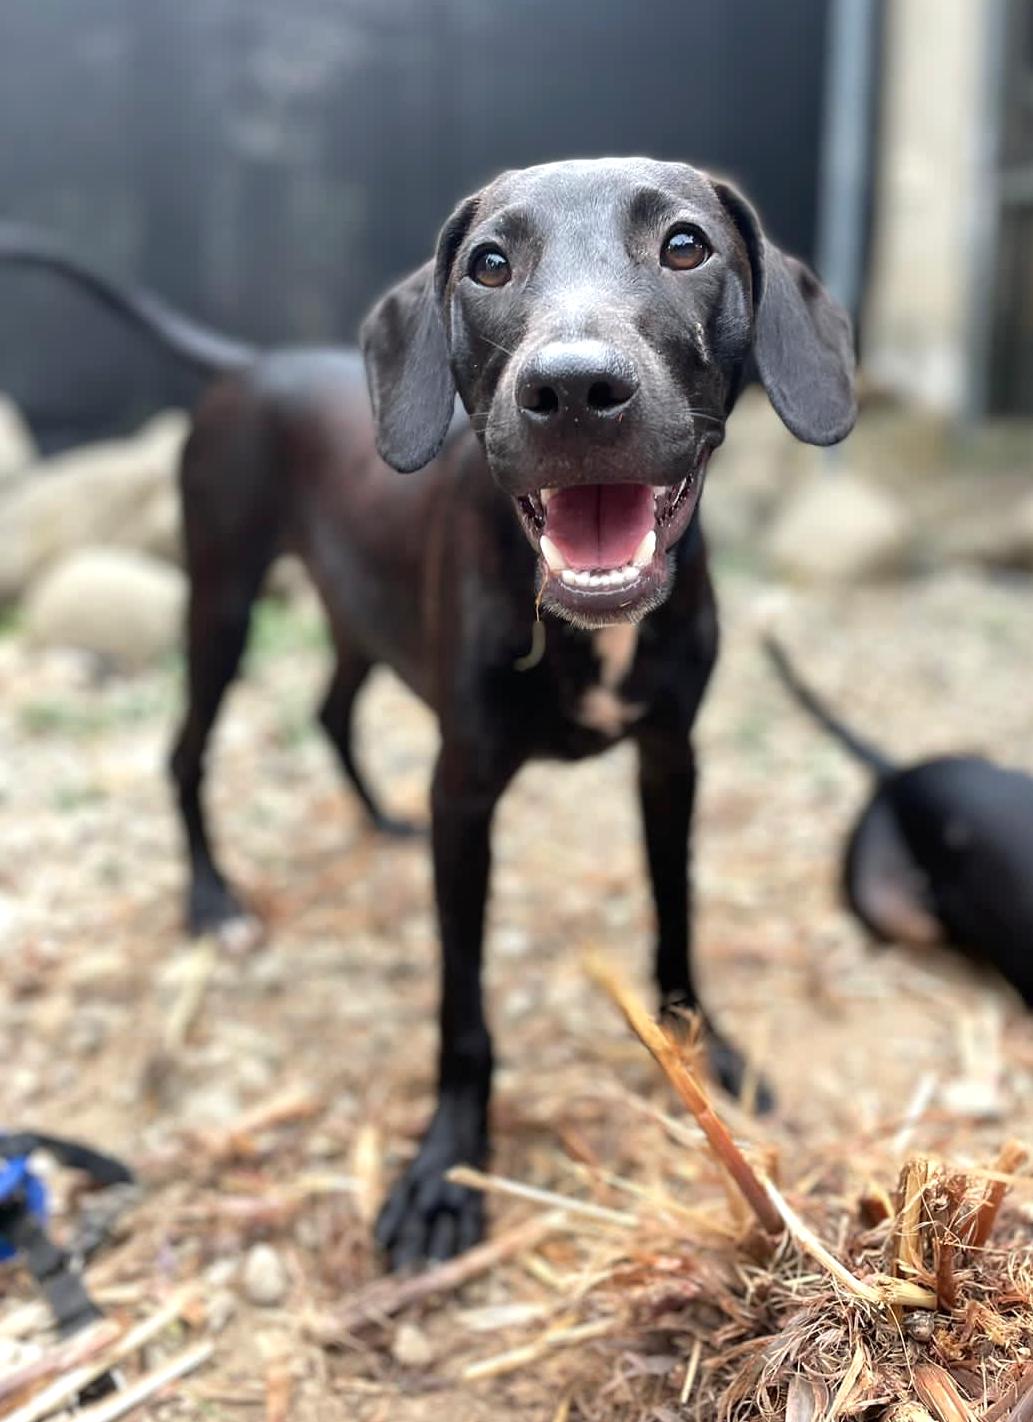 Adorable black dog smiling at the camera